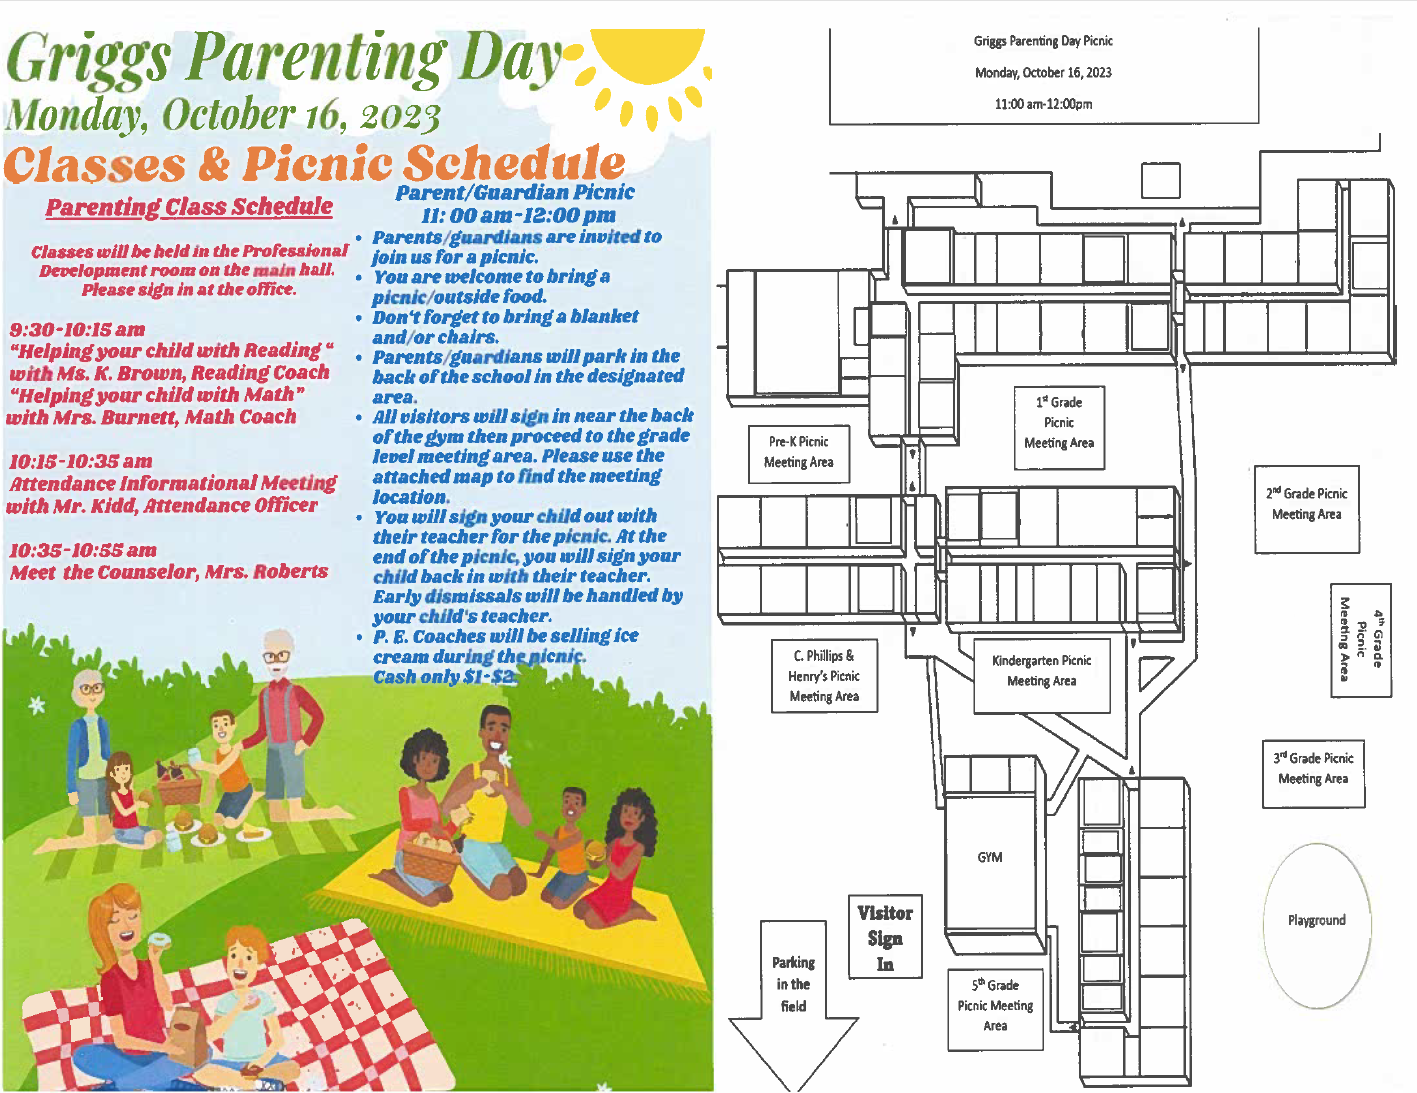 Parenting Schedule & Map